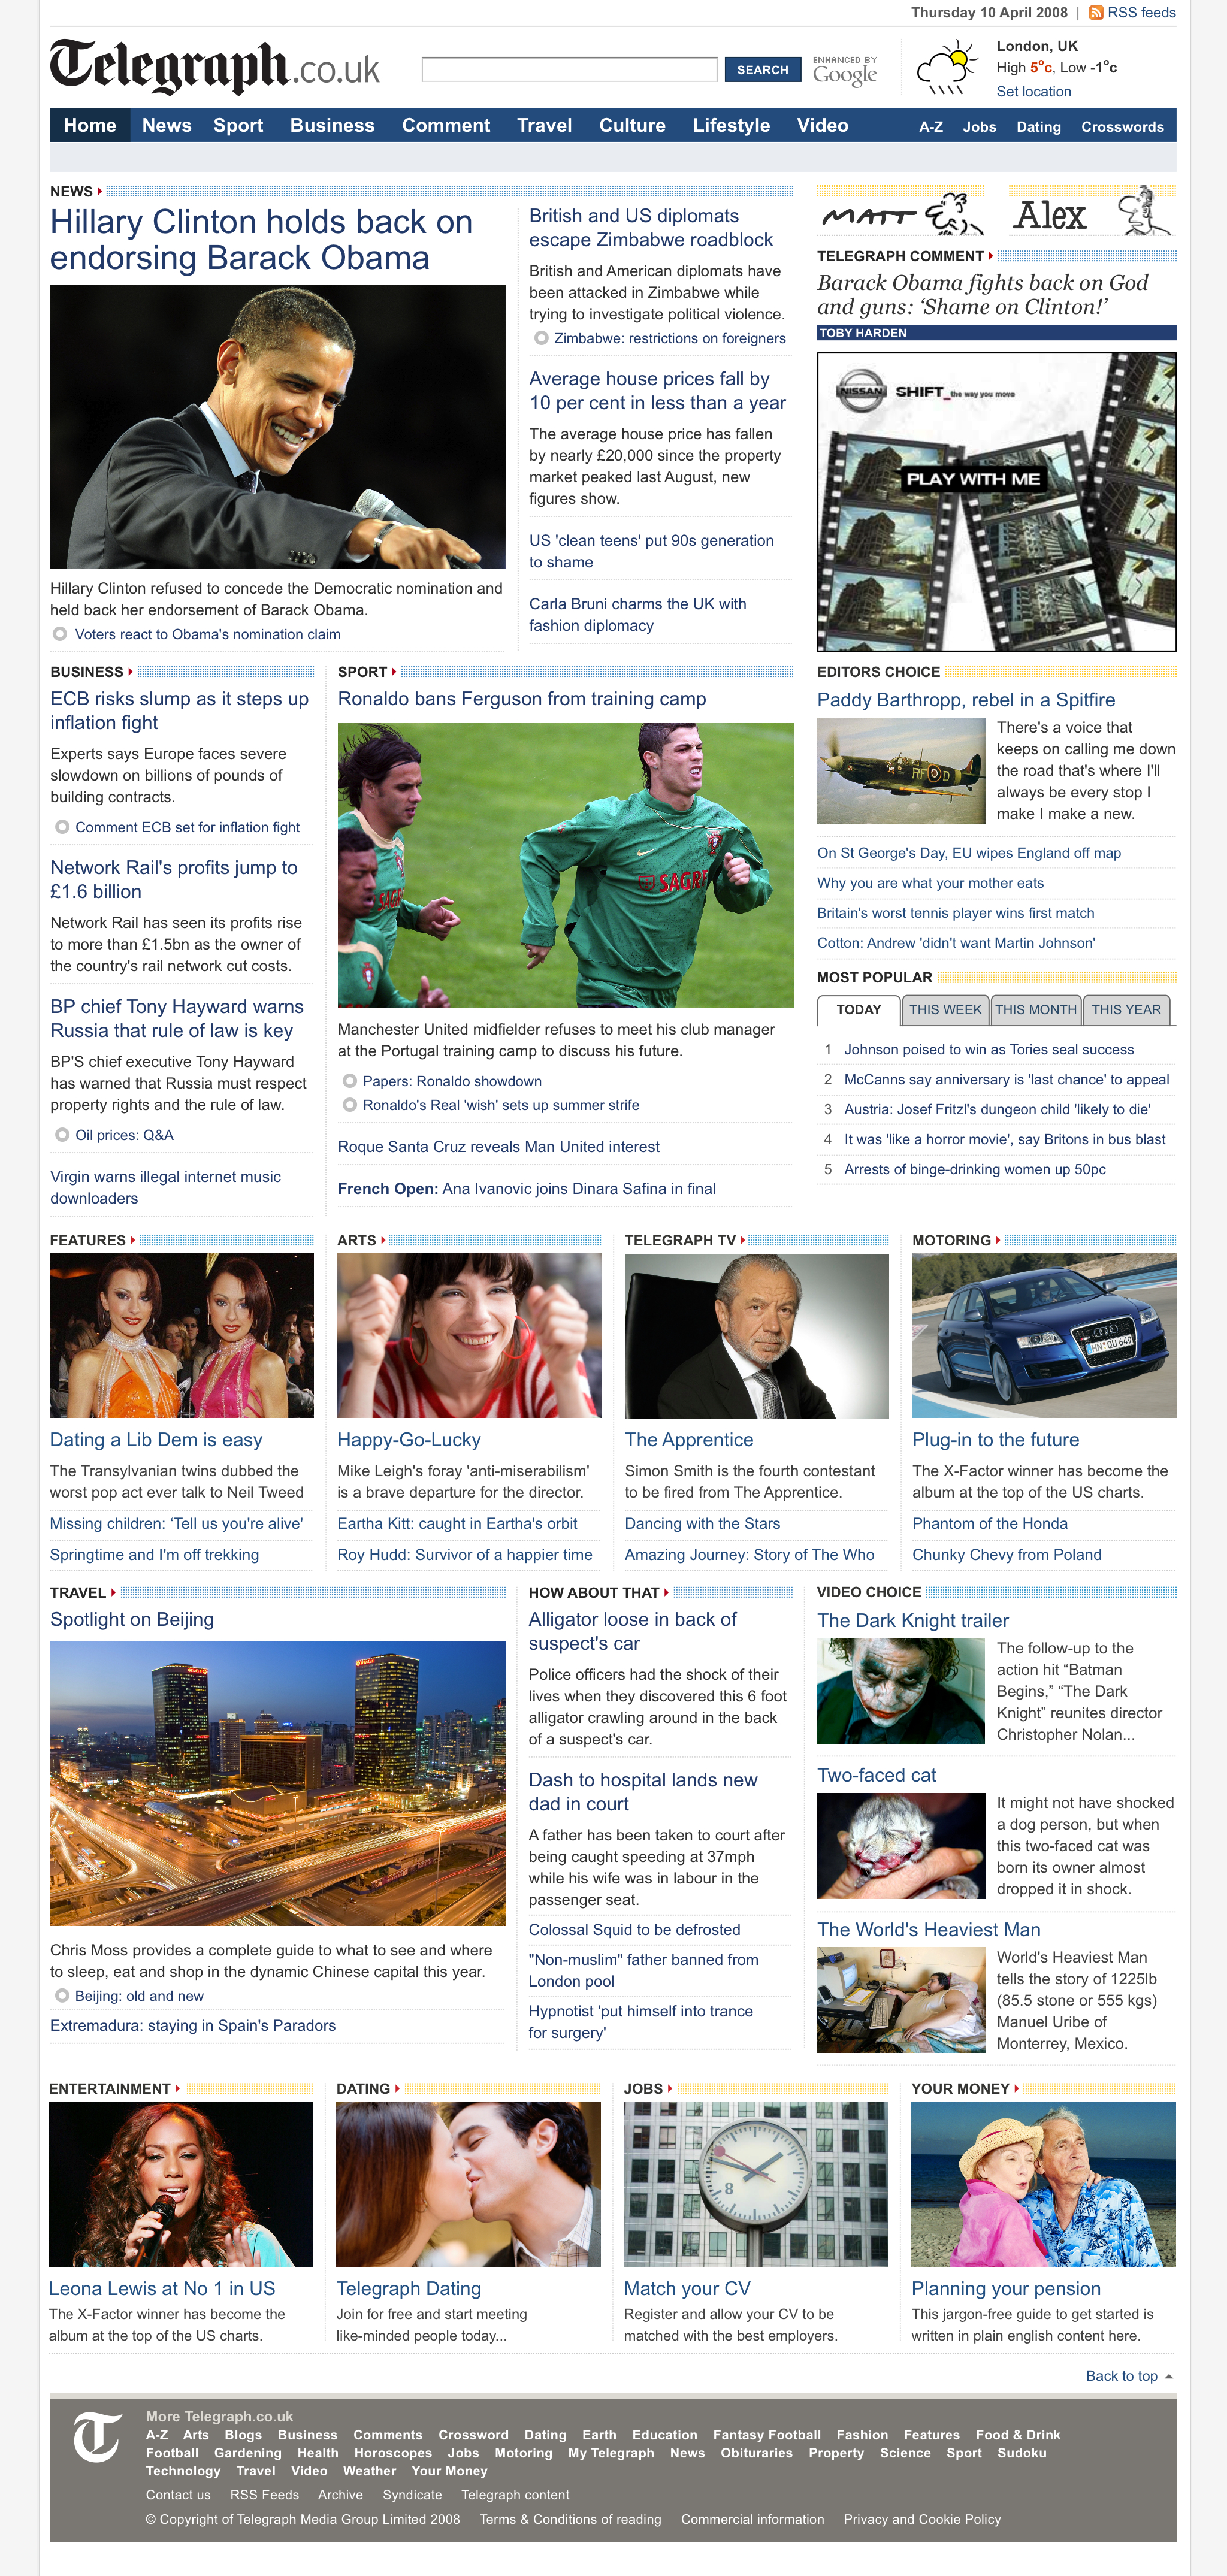 Screenshot of redesigned Telegraph.co.uk homepage